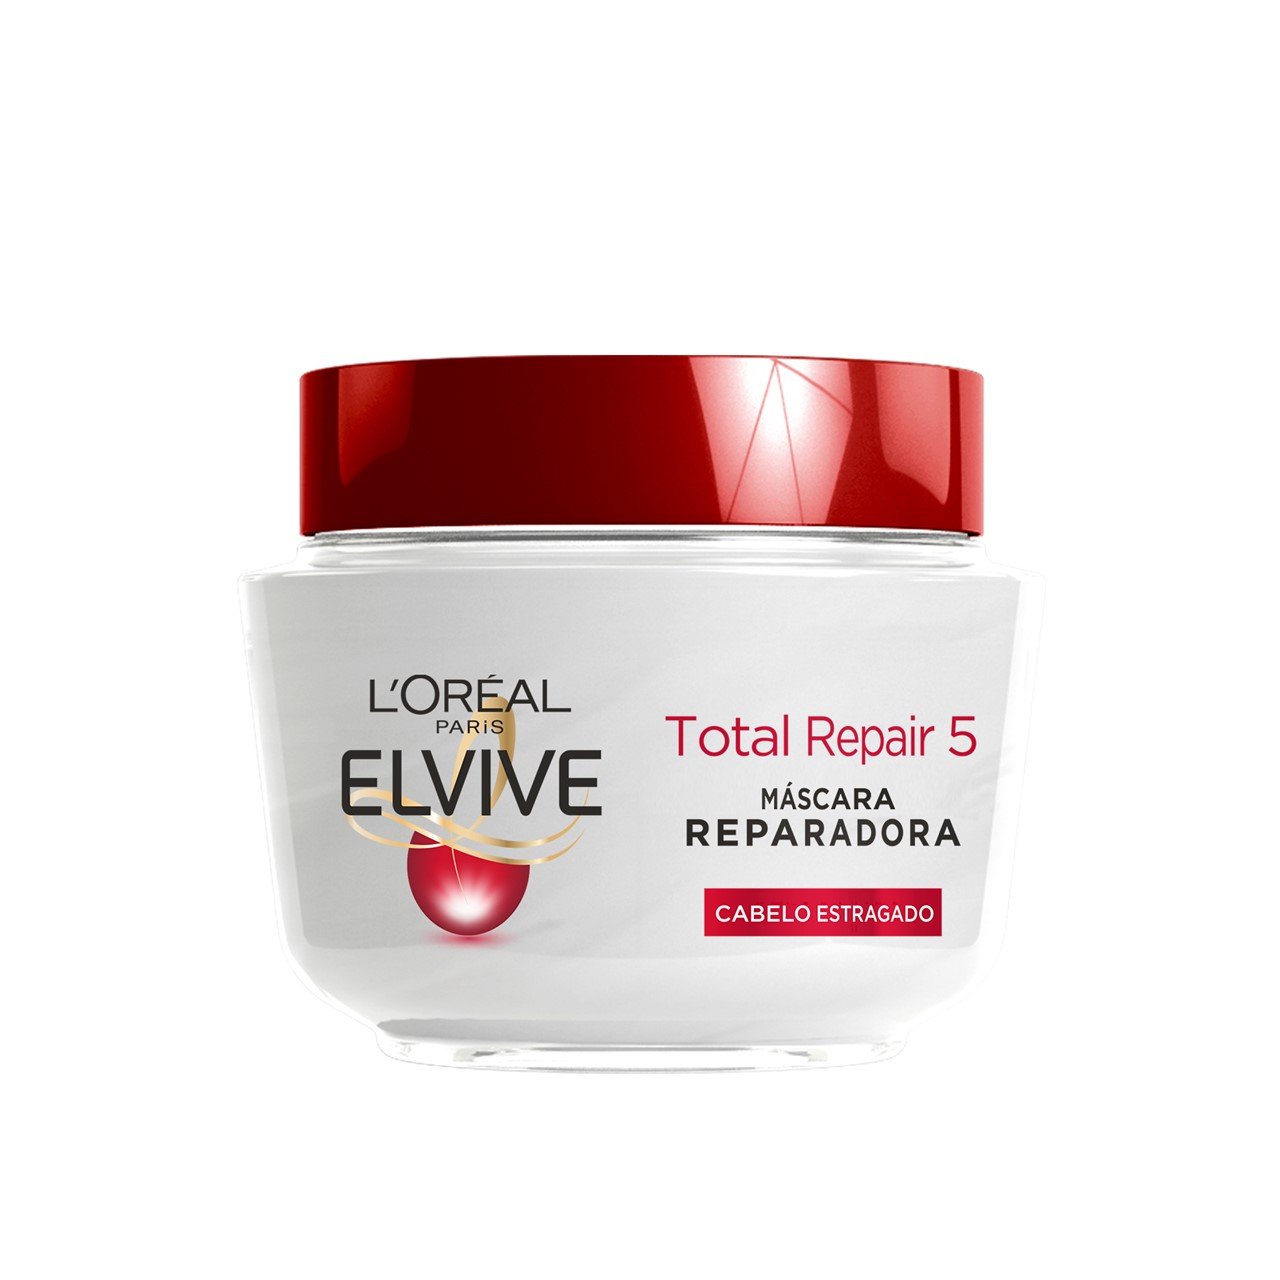 L'Oréal Paris Elvive Total Repair 5 Hair Mask 300ml (10.14fl oz)